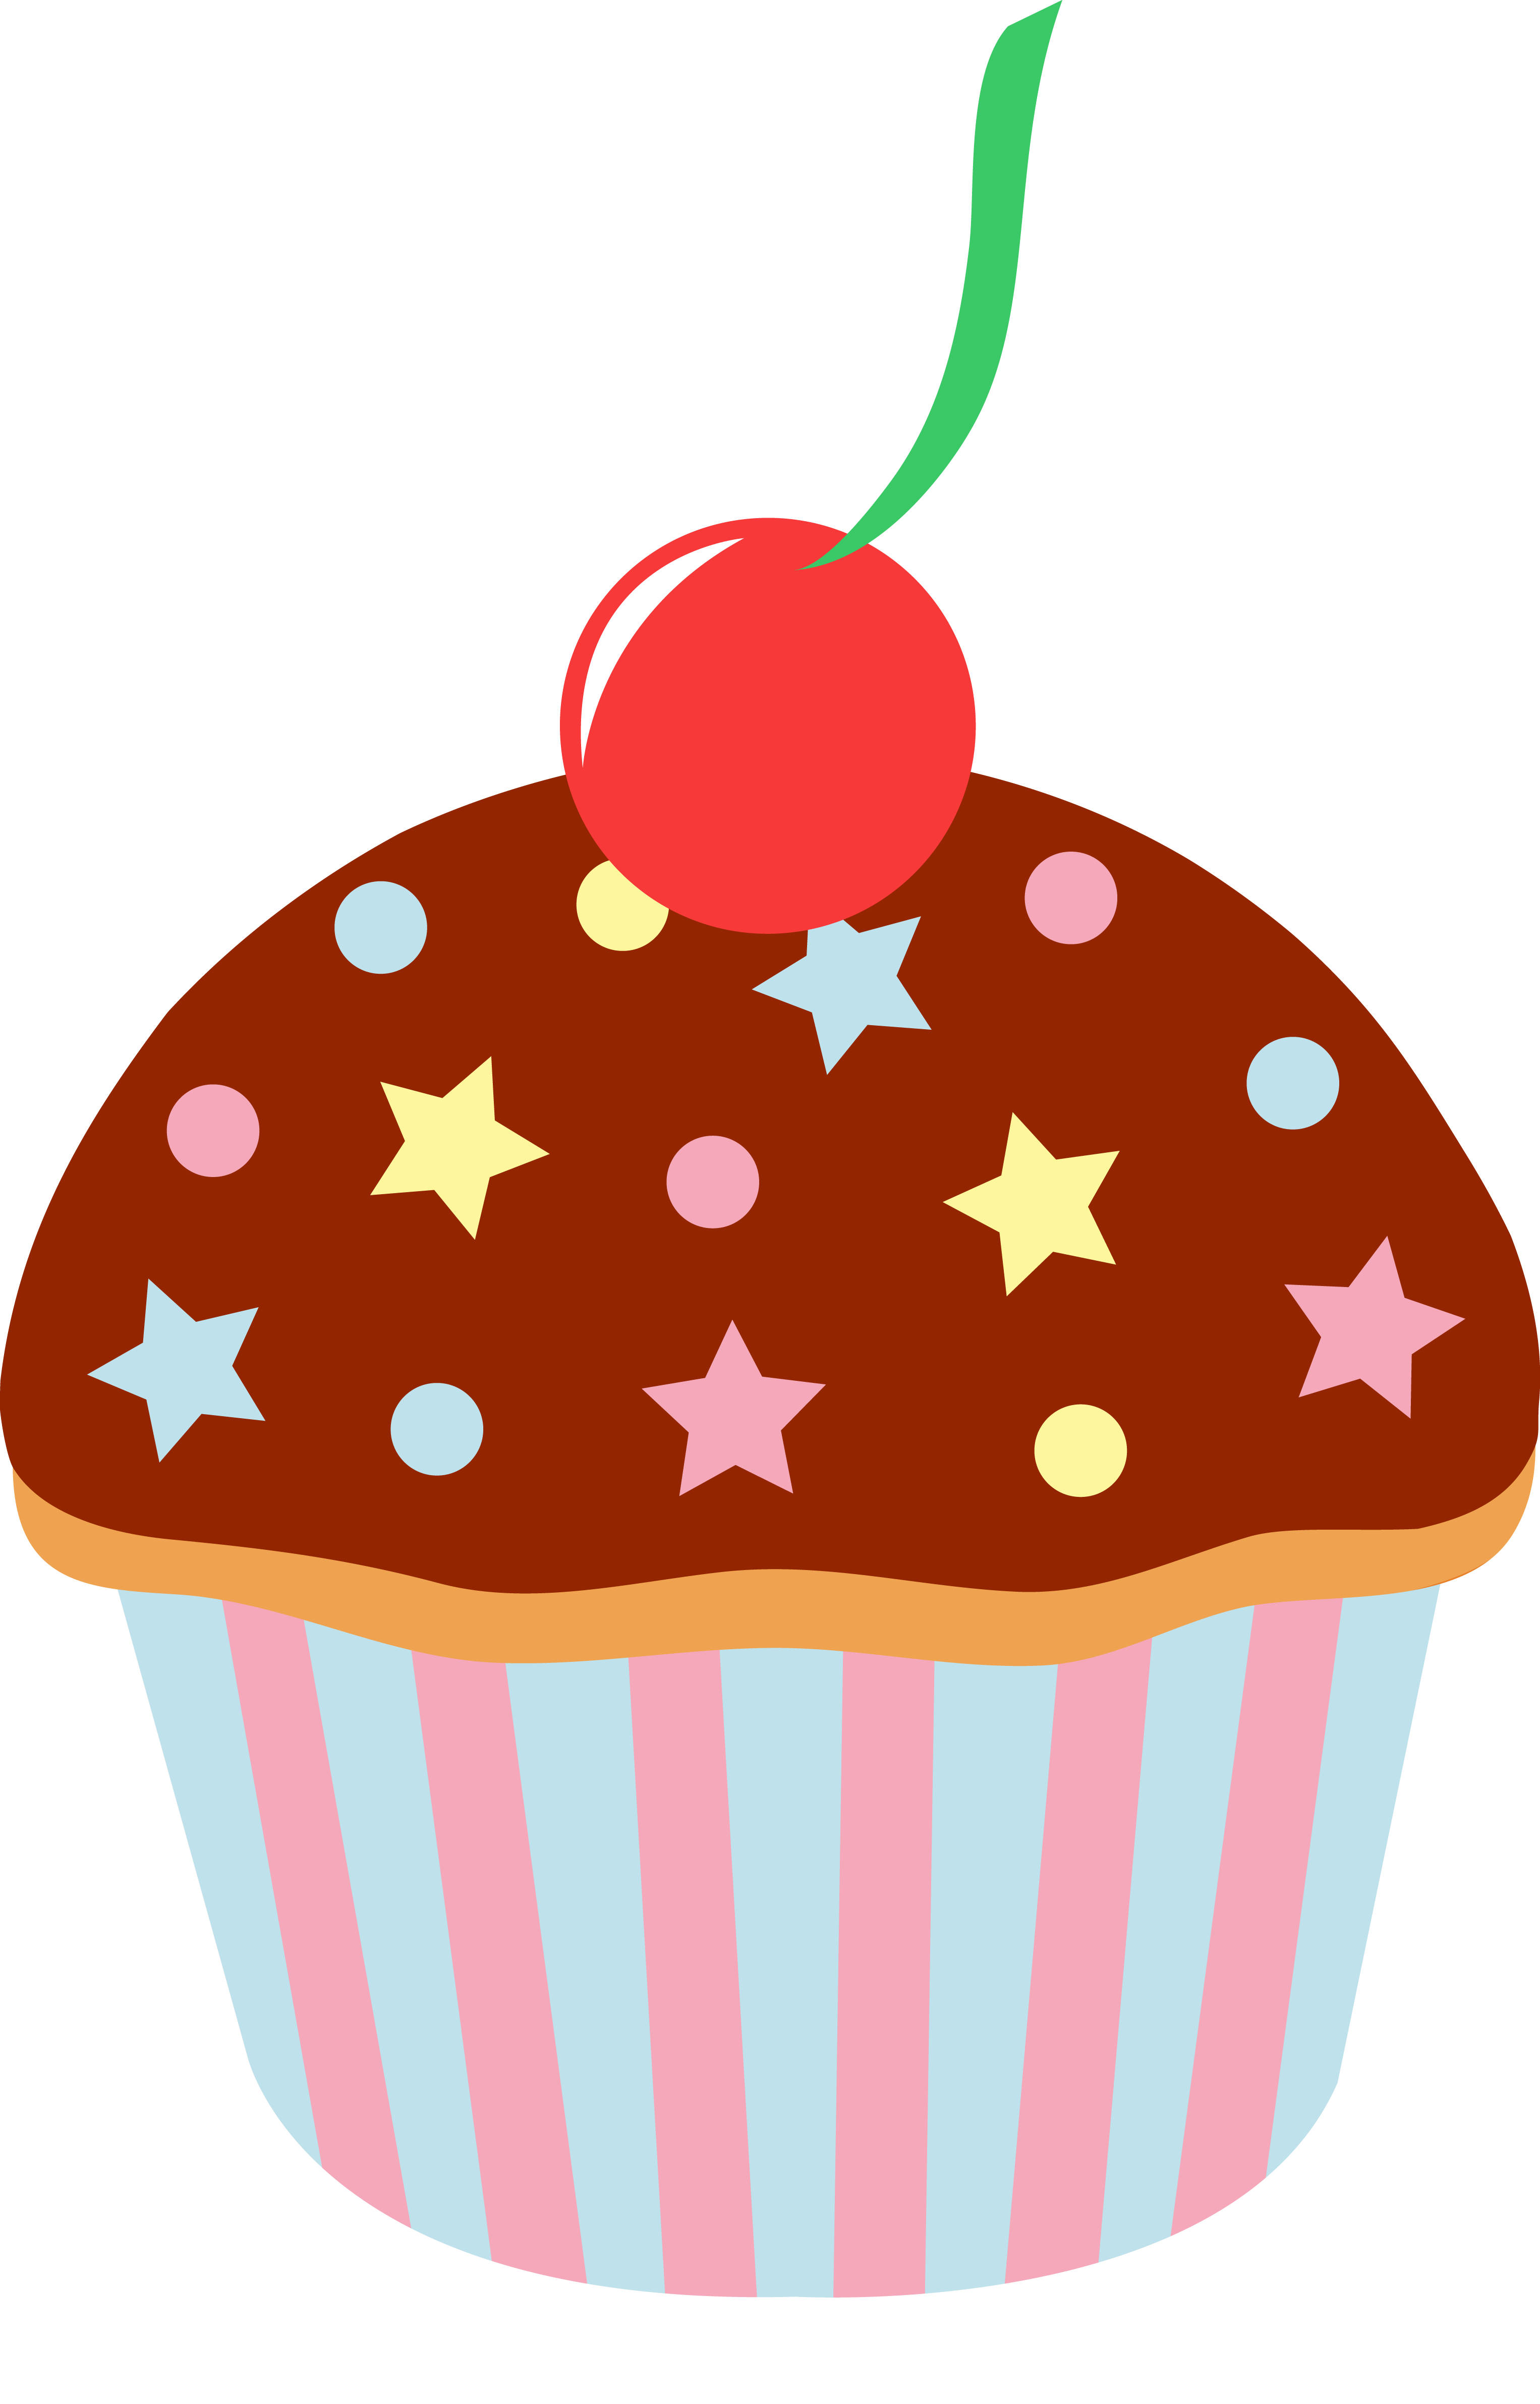 Cupcake Cartoon Image | Free Download Clip Art | Free Clip Art ...